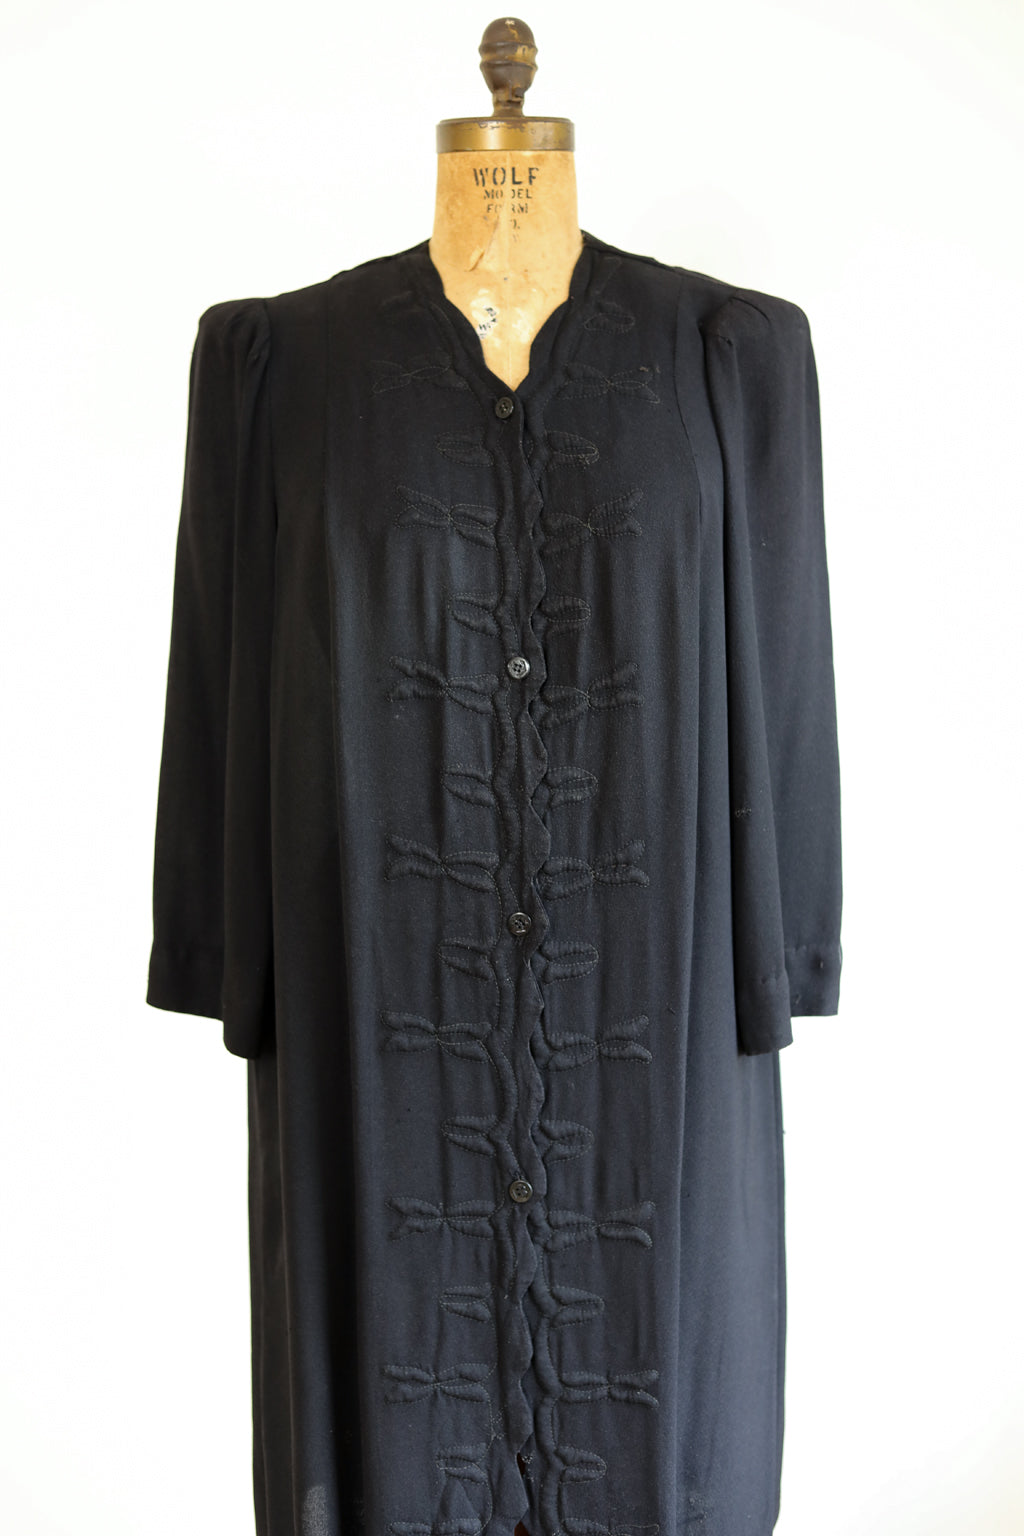 Vintage 1930s Duster Jacket - VOLUP Black Crepe Rayon w Trapunto Details + Sailor Buttons Cocktail Dress or Coat Size L to XL